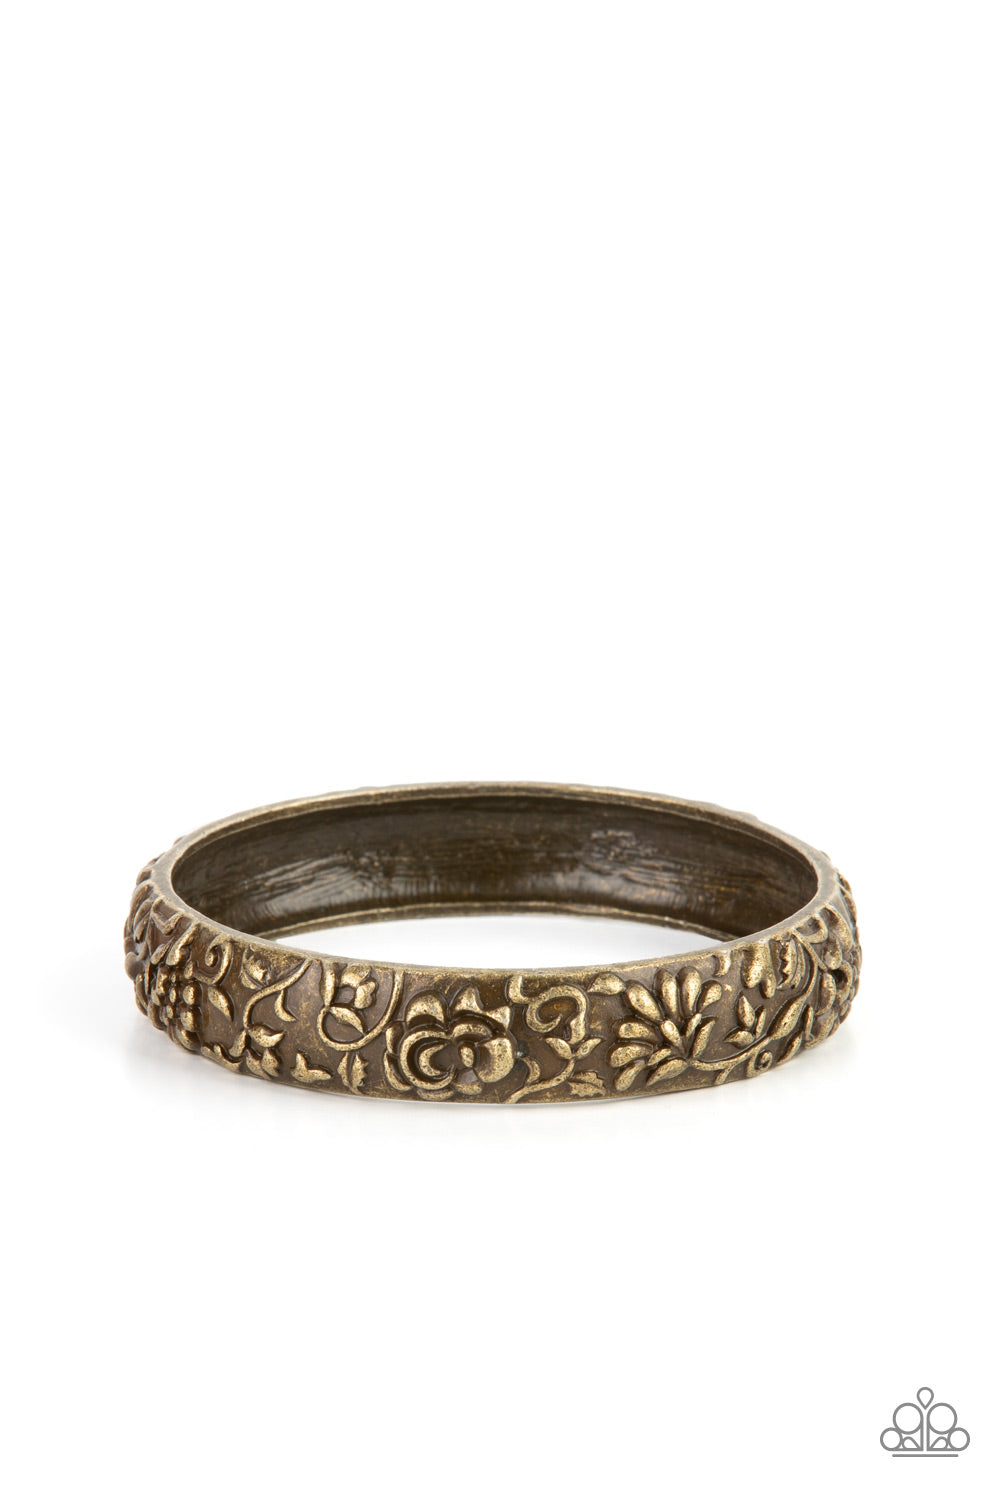 Victorian Meadow - Brass Bracelet freeshipping - JewLz4u Gemstone Gallery